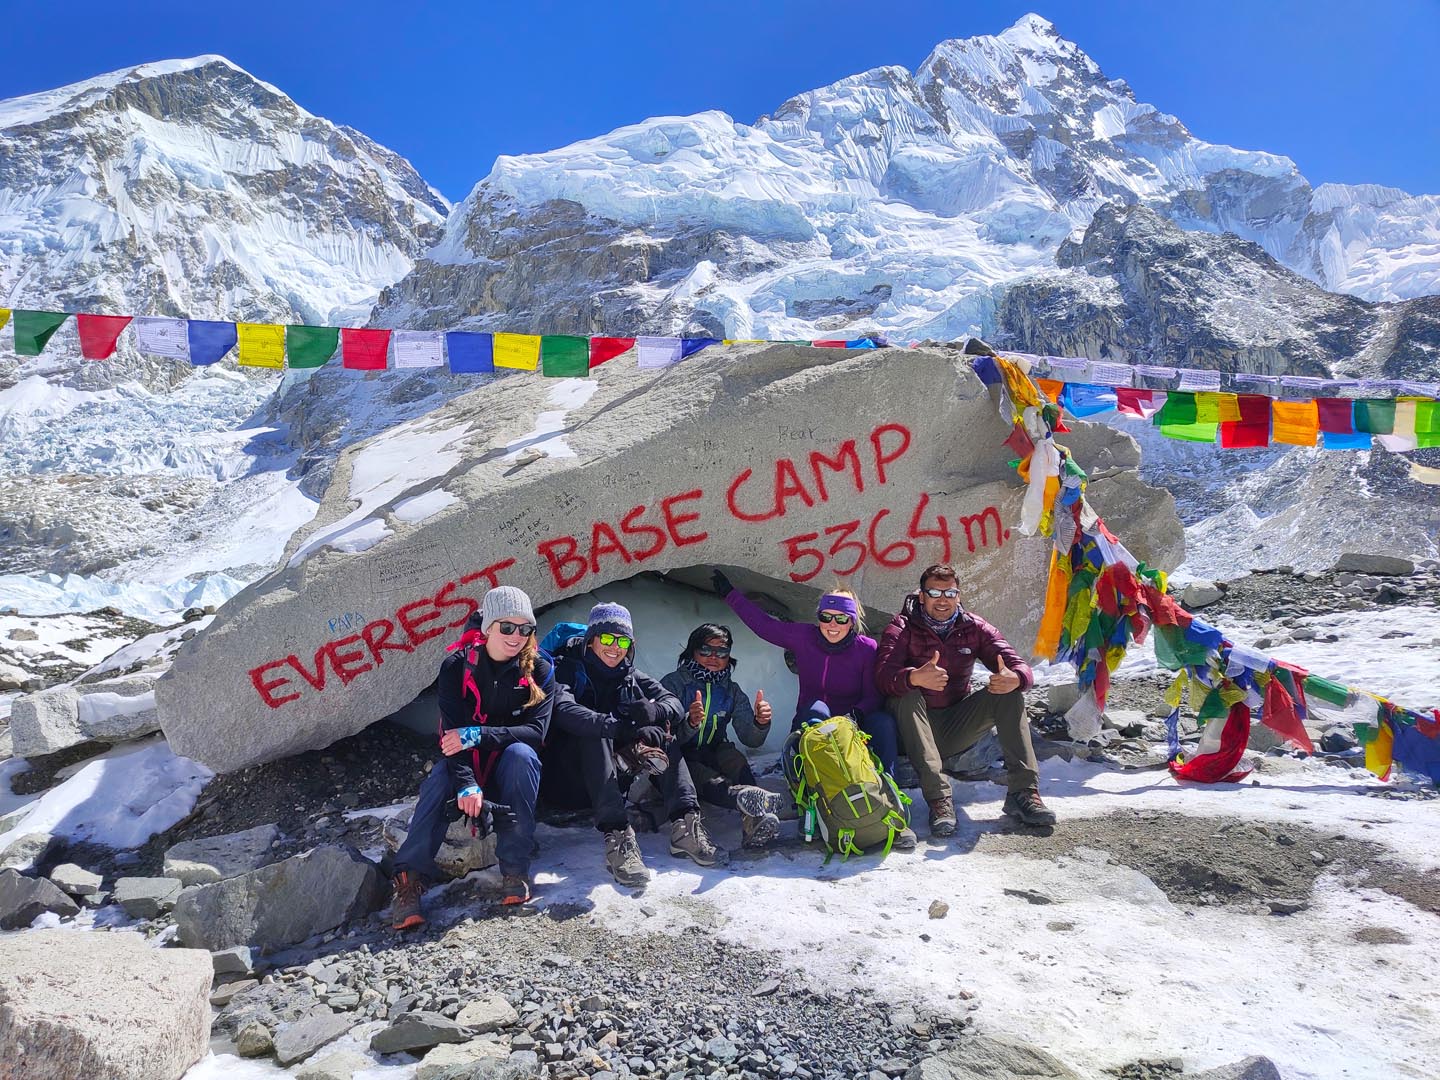 Everest Base Camp: A trip of a lifetime